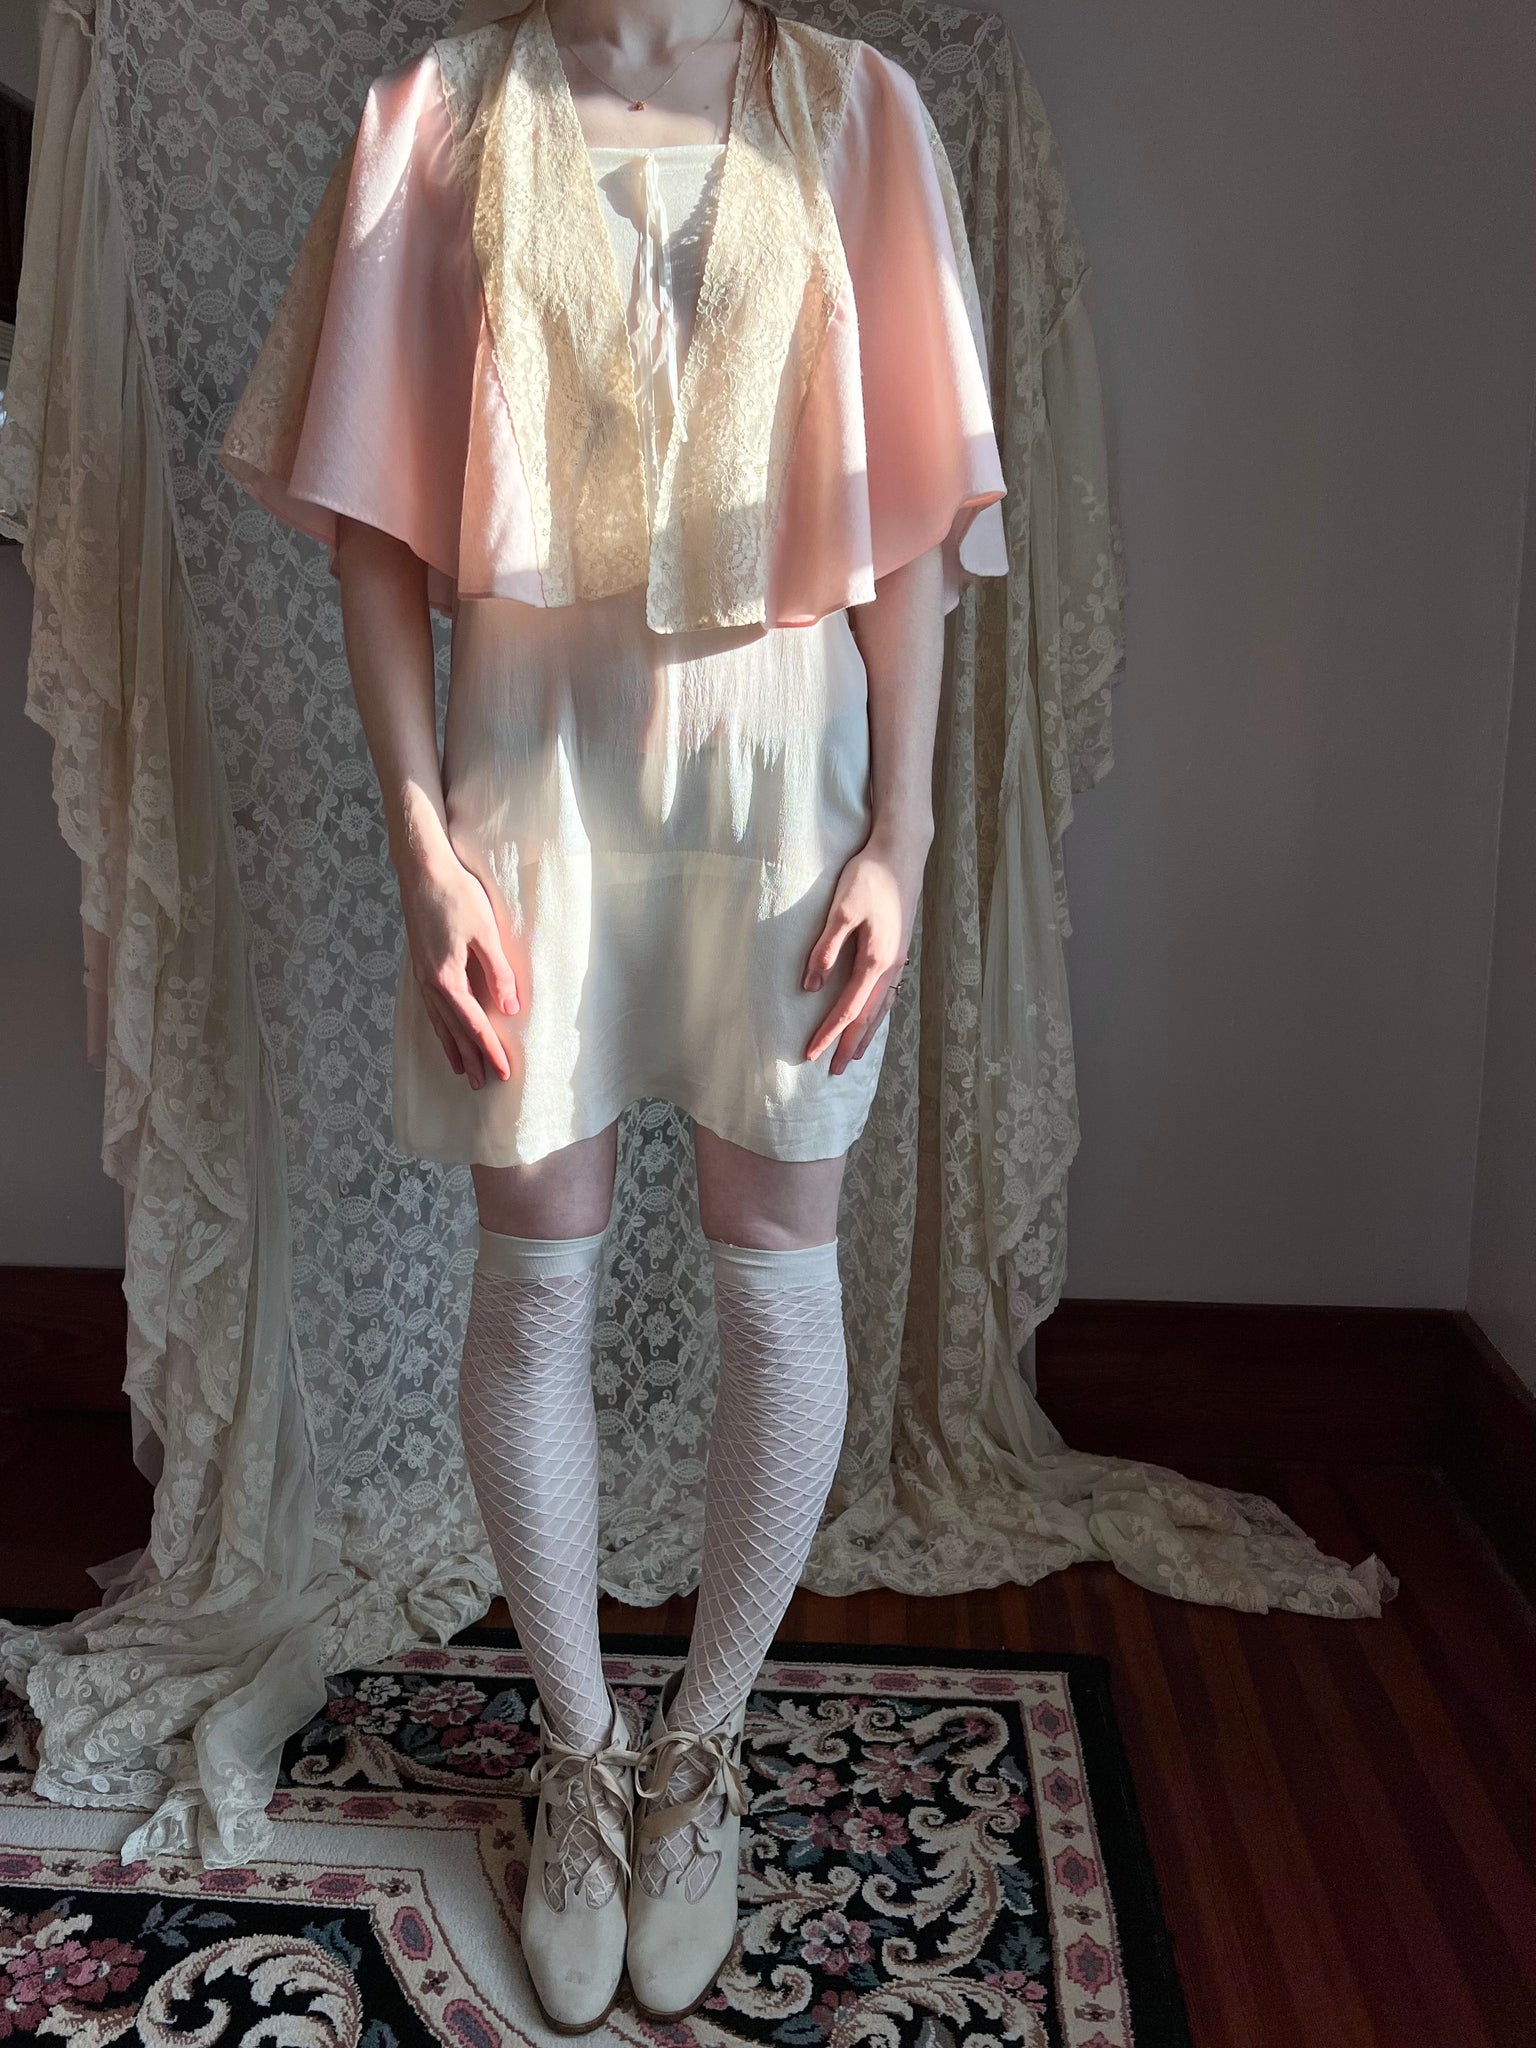 1930s Flannel Cape Pale Pink Ecru Lace